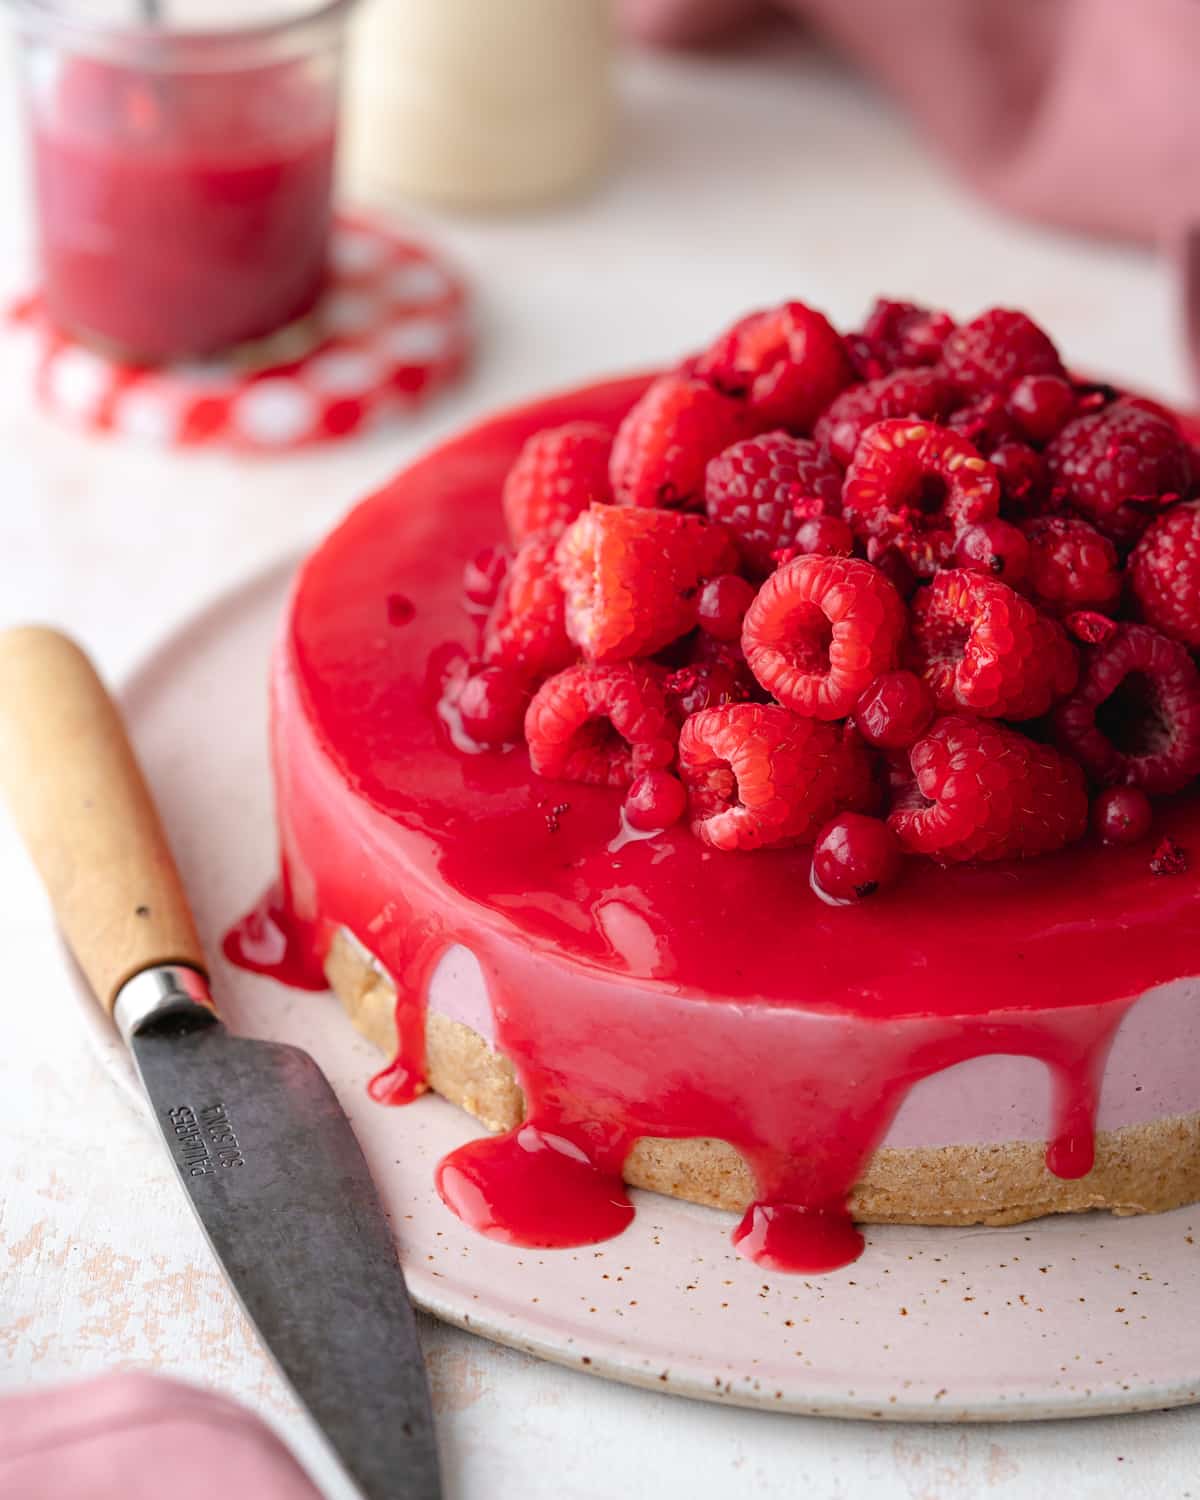 vegan raspberry cheesecake with raspberry sauce and fresh raspberries on top.